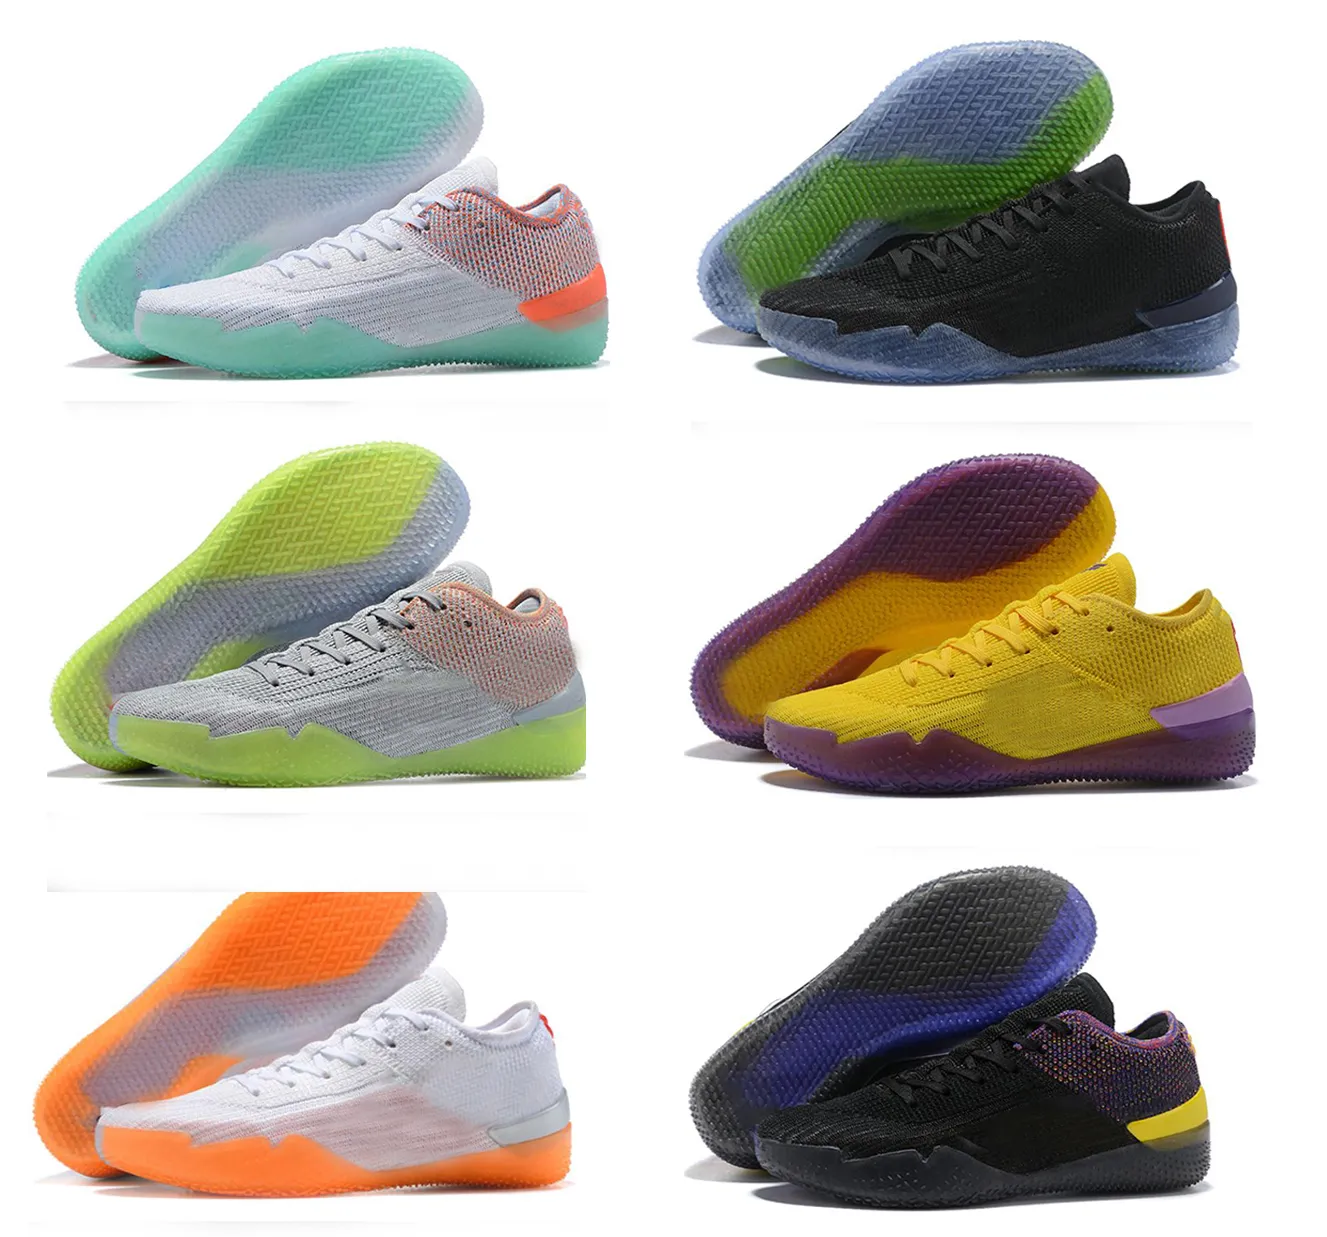 Ad Nxt 360 Sneakers Basketballschuhe Sport Herren Sneakers zum Verkauf A.D. Lightweight Agility Mamba Mentality Basketballschuh yakuda Lokales Training dhgate Rabatt